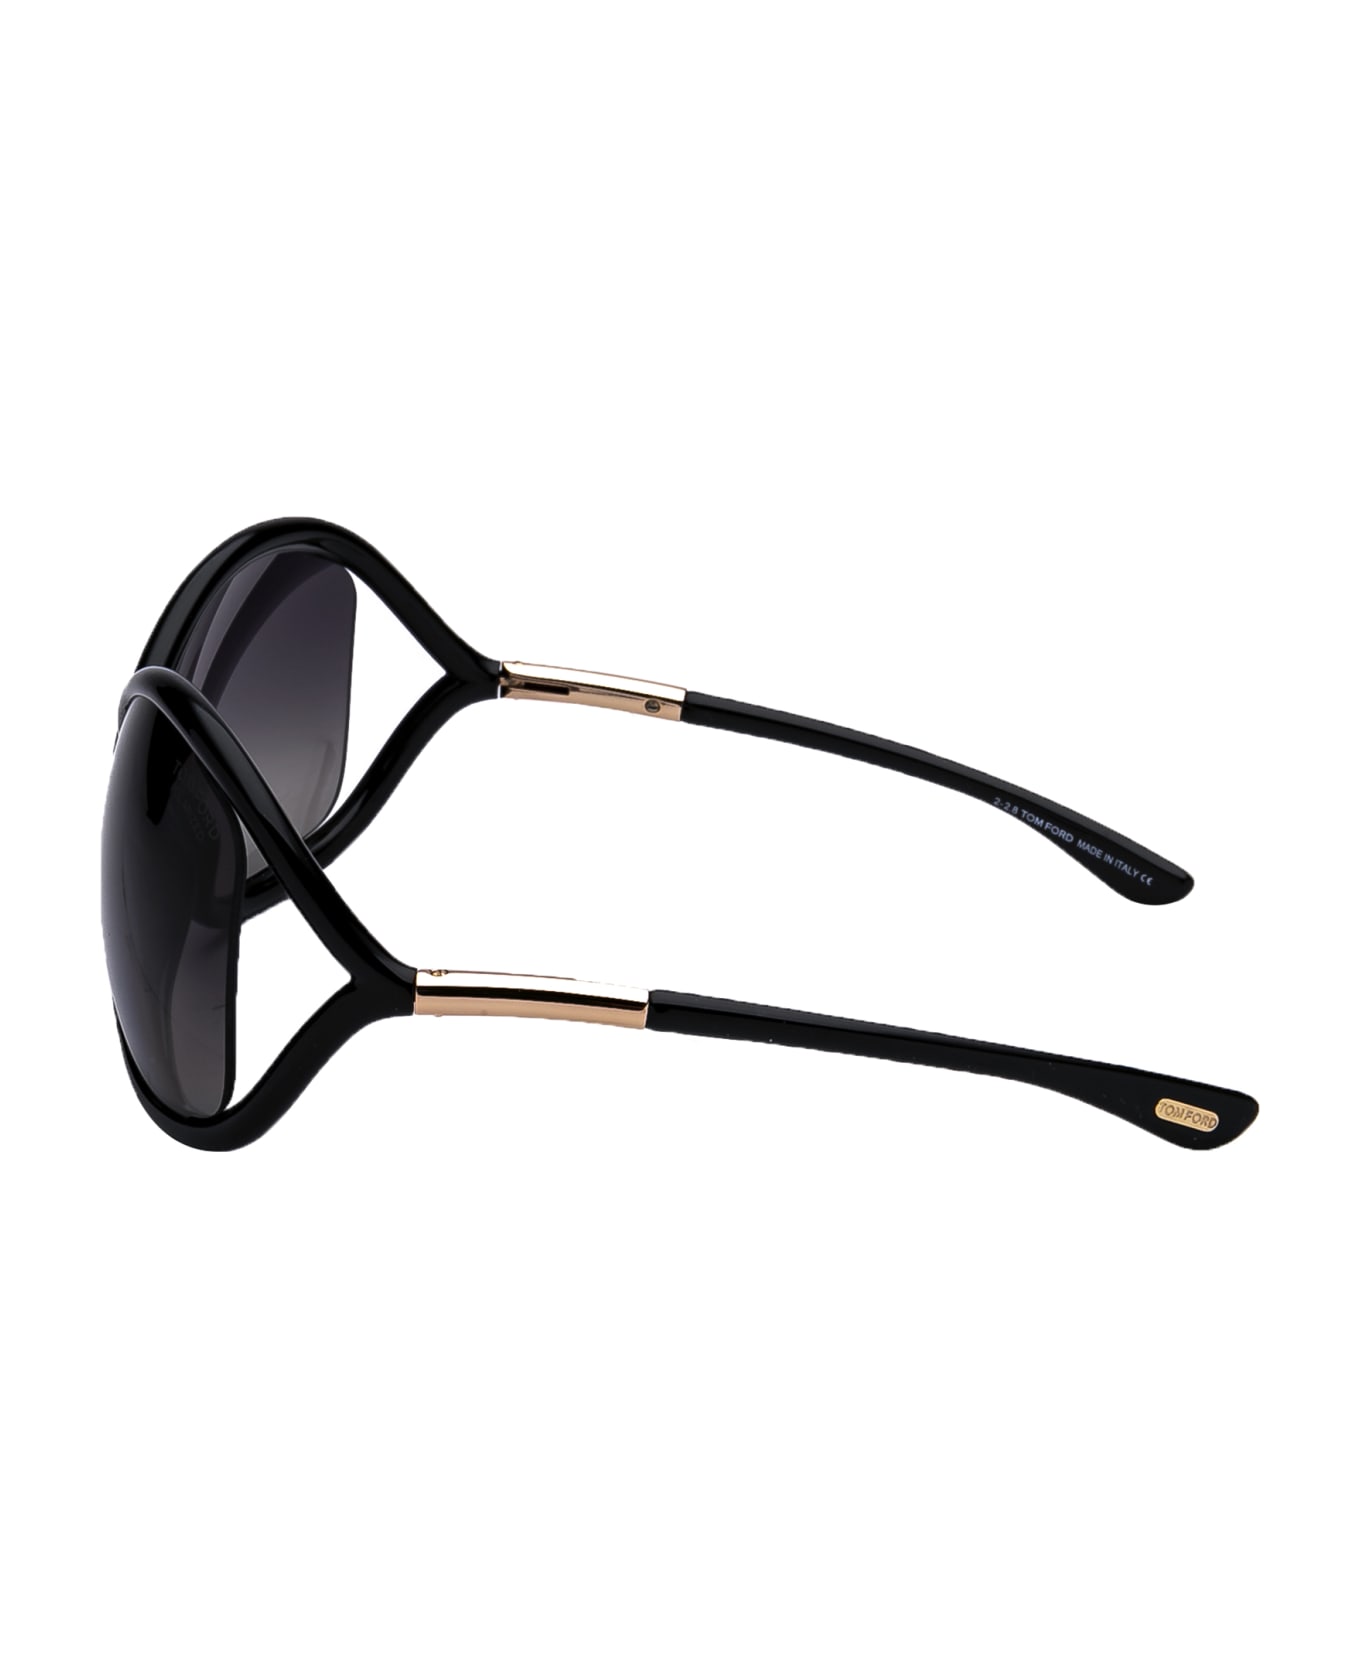 Tom Ford Eyewear Whitney Sunglasses - 01D Nero Lucido / Fumo Polar